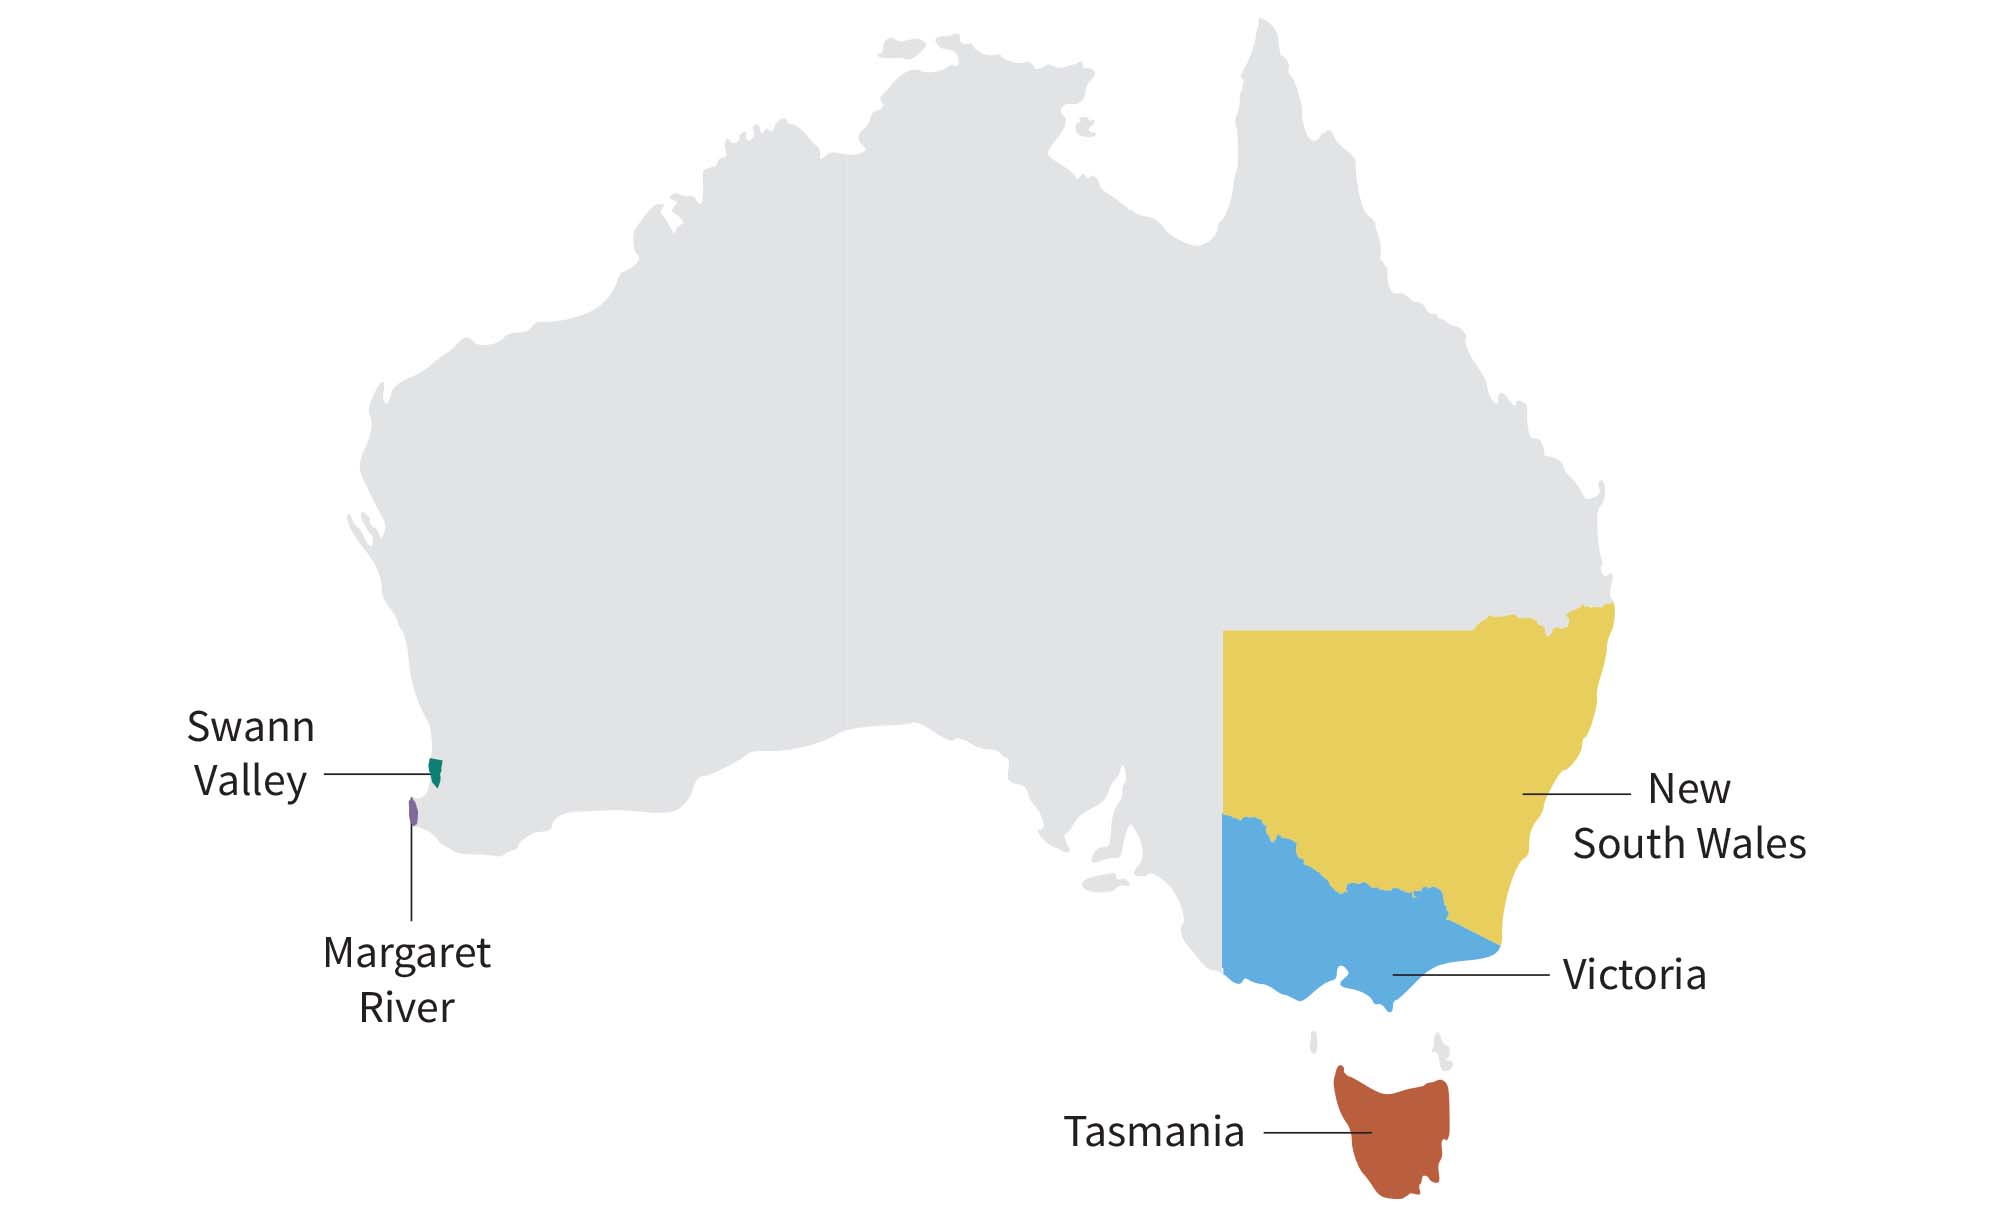 map of chenin blanc winegrowing regions in Australia: Swann Valley, Margaret River, New South Wales, Victoria, Tasmania